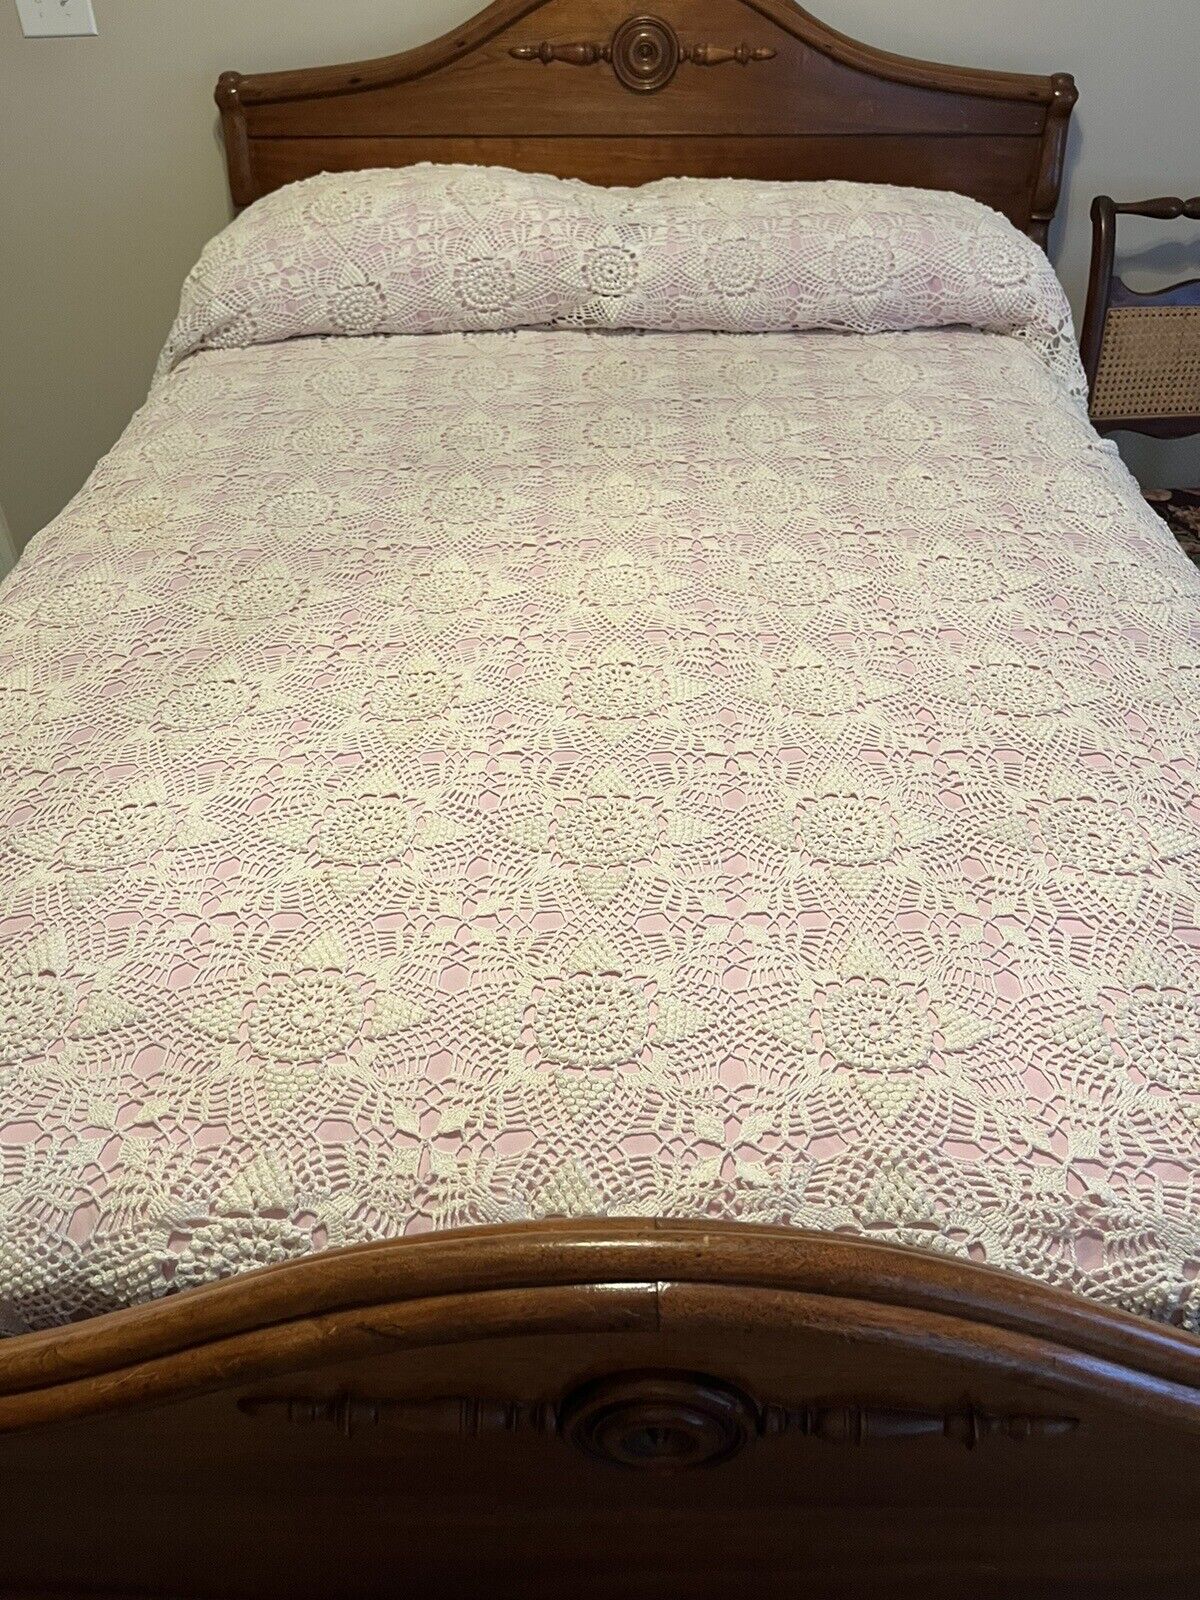 Antique Handmade VTG 50’s Crocheted Bed Spread Coverlet Star Floral Design